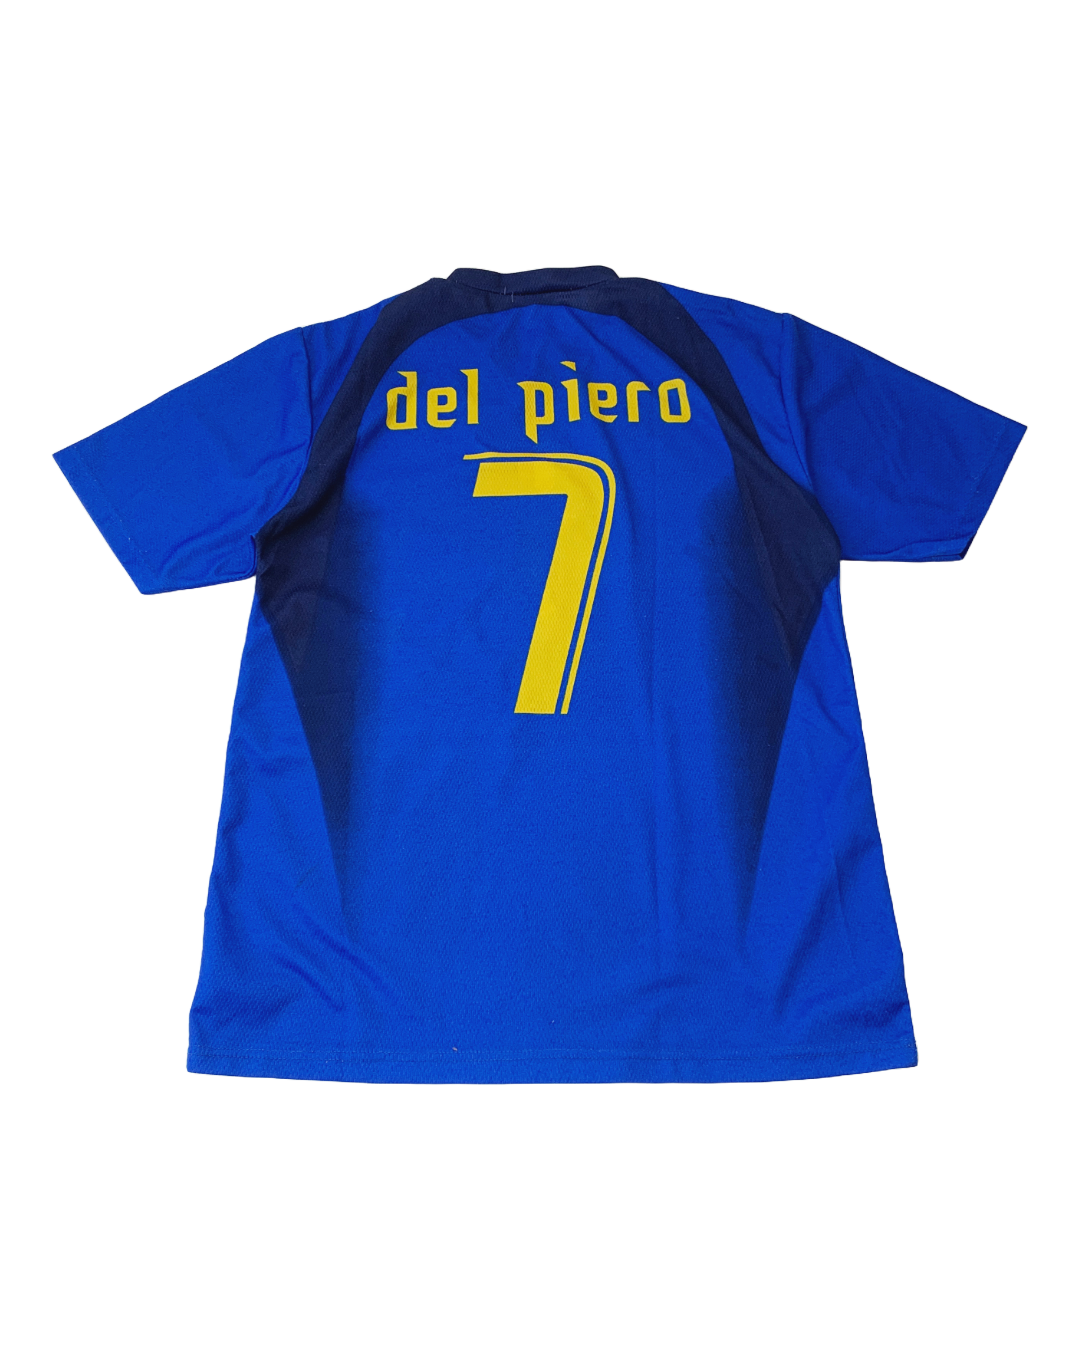 Italia Vintage Del Piero Jersey - S